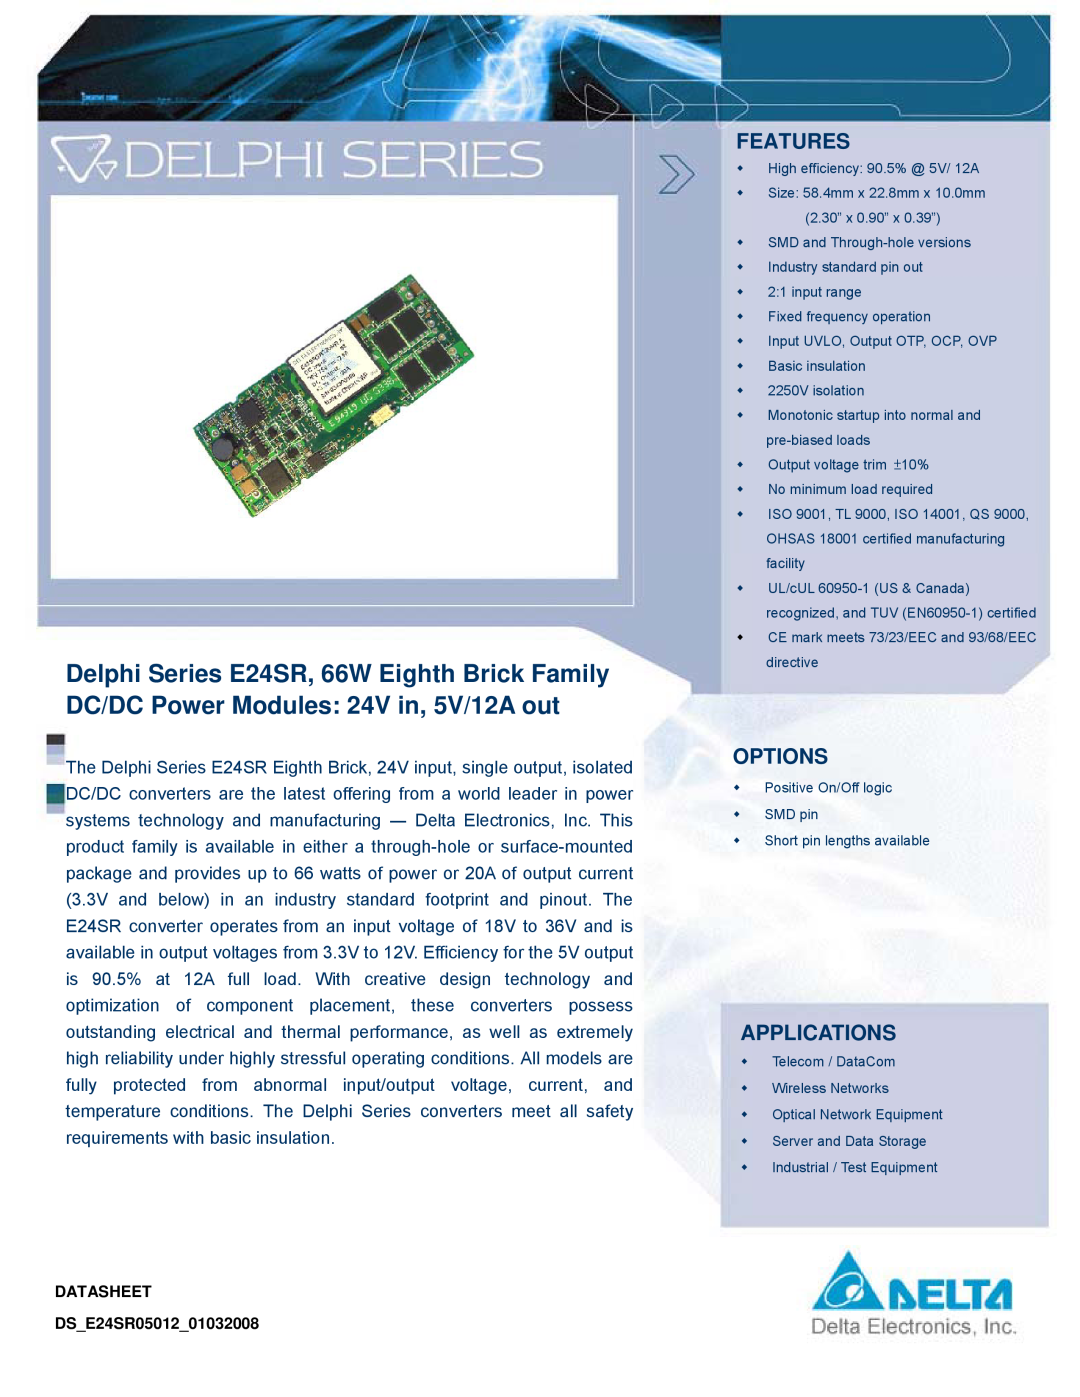 Delta Electronics Series E24SR manual Features, Options, Applications, DATASHEET DSE24SR0501201032008 